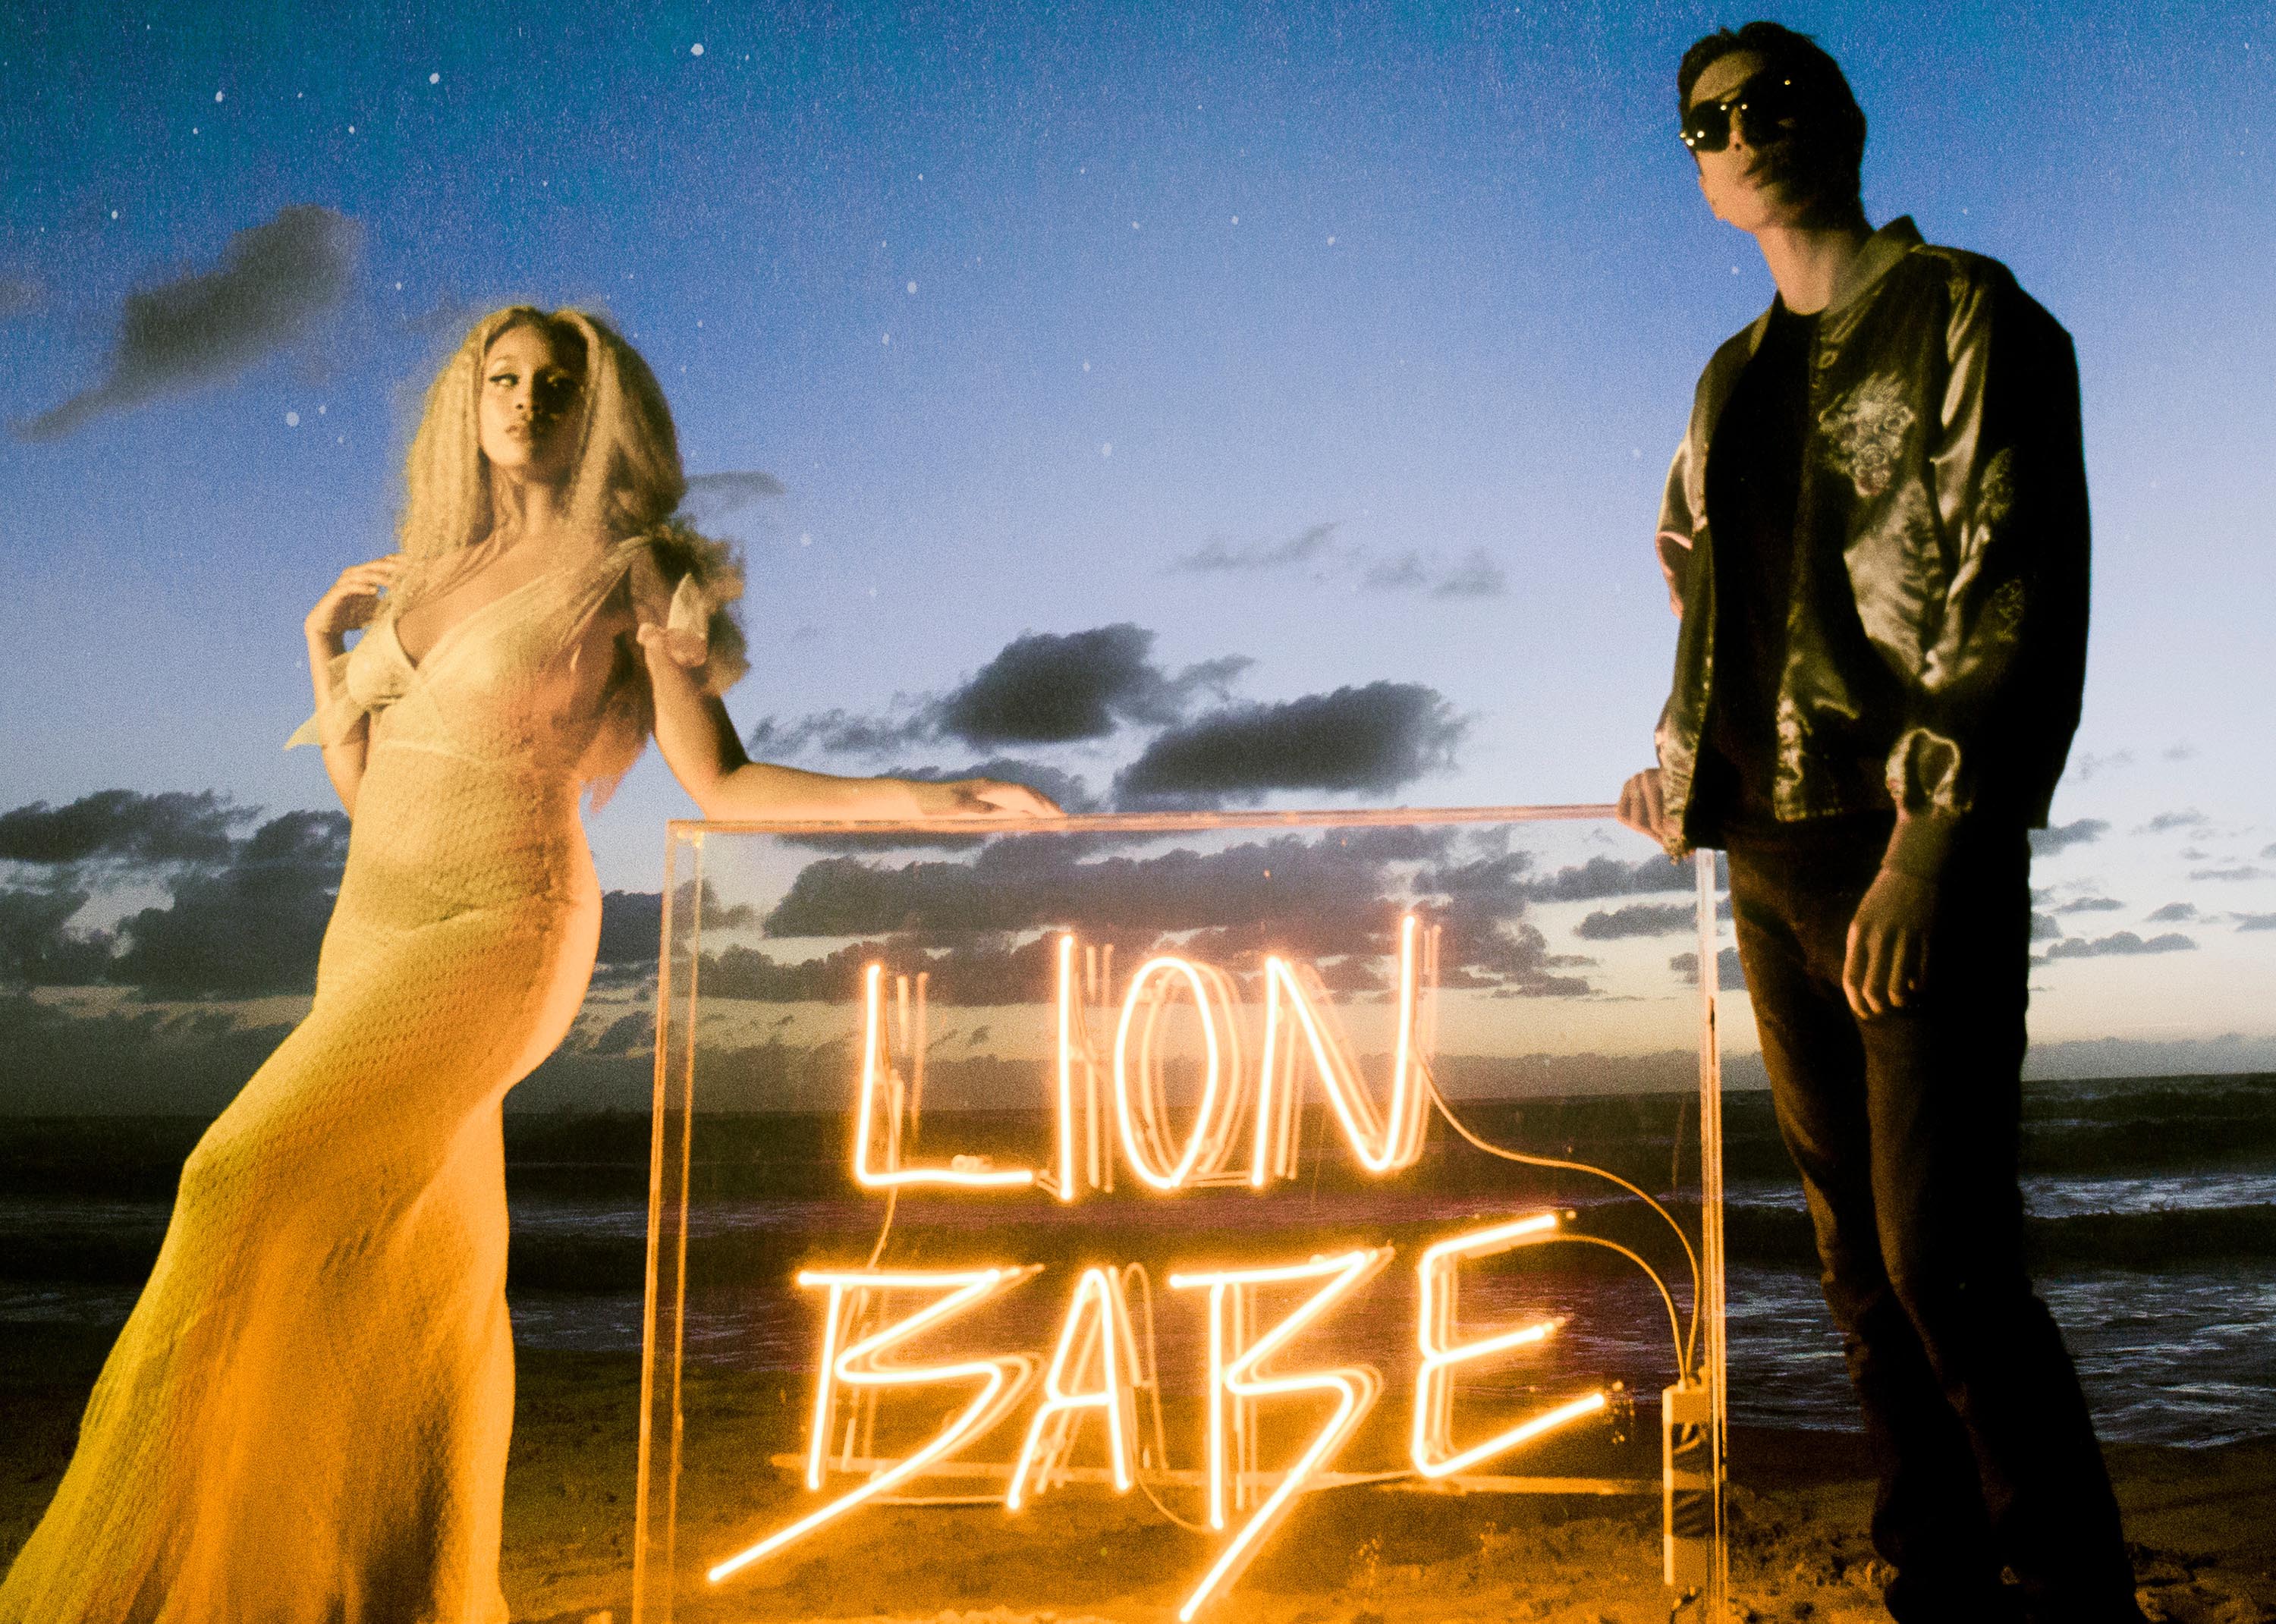 Lion Babe by Dana Trippe